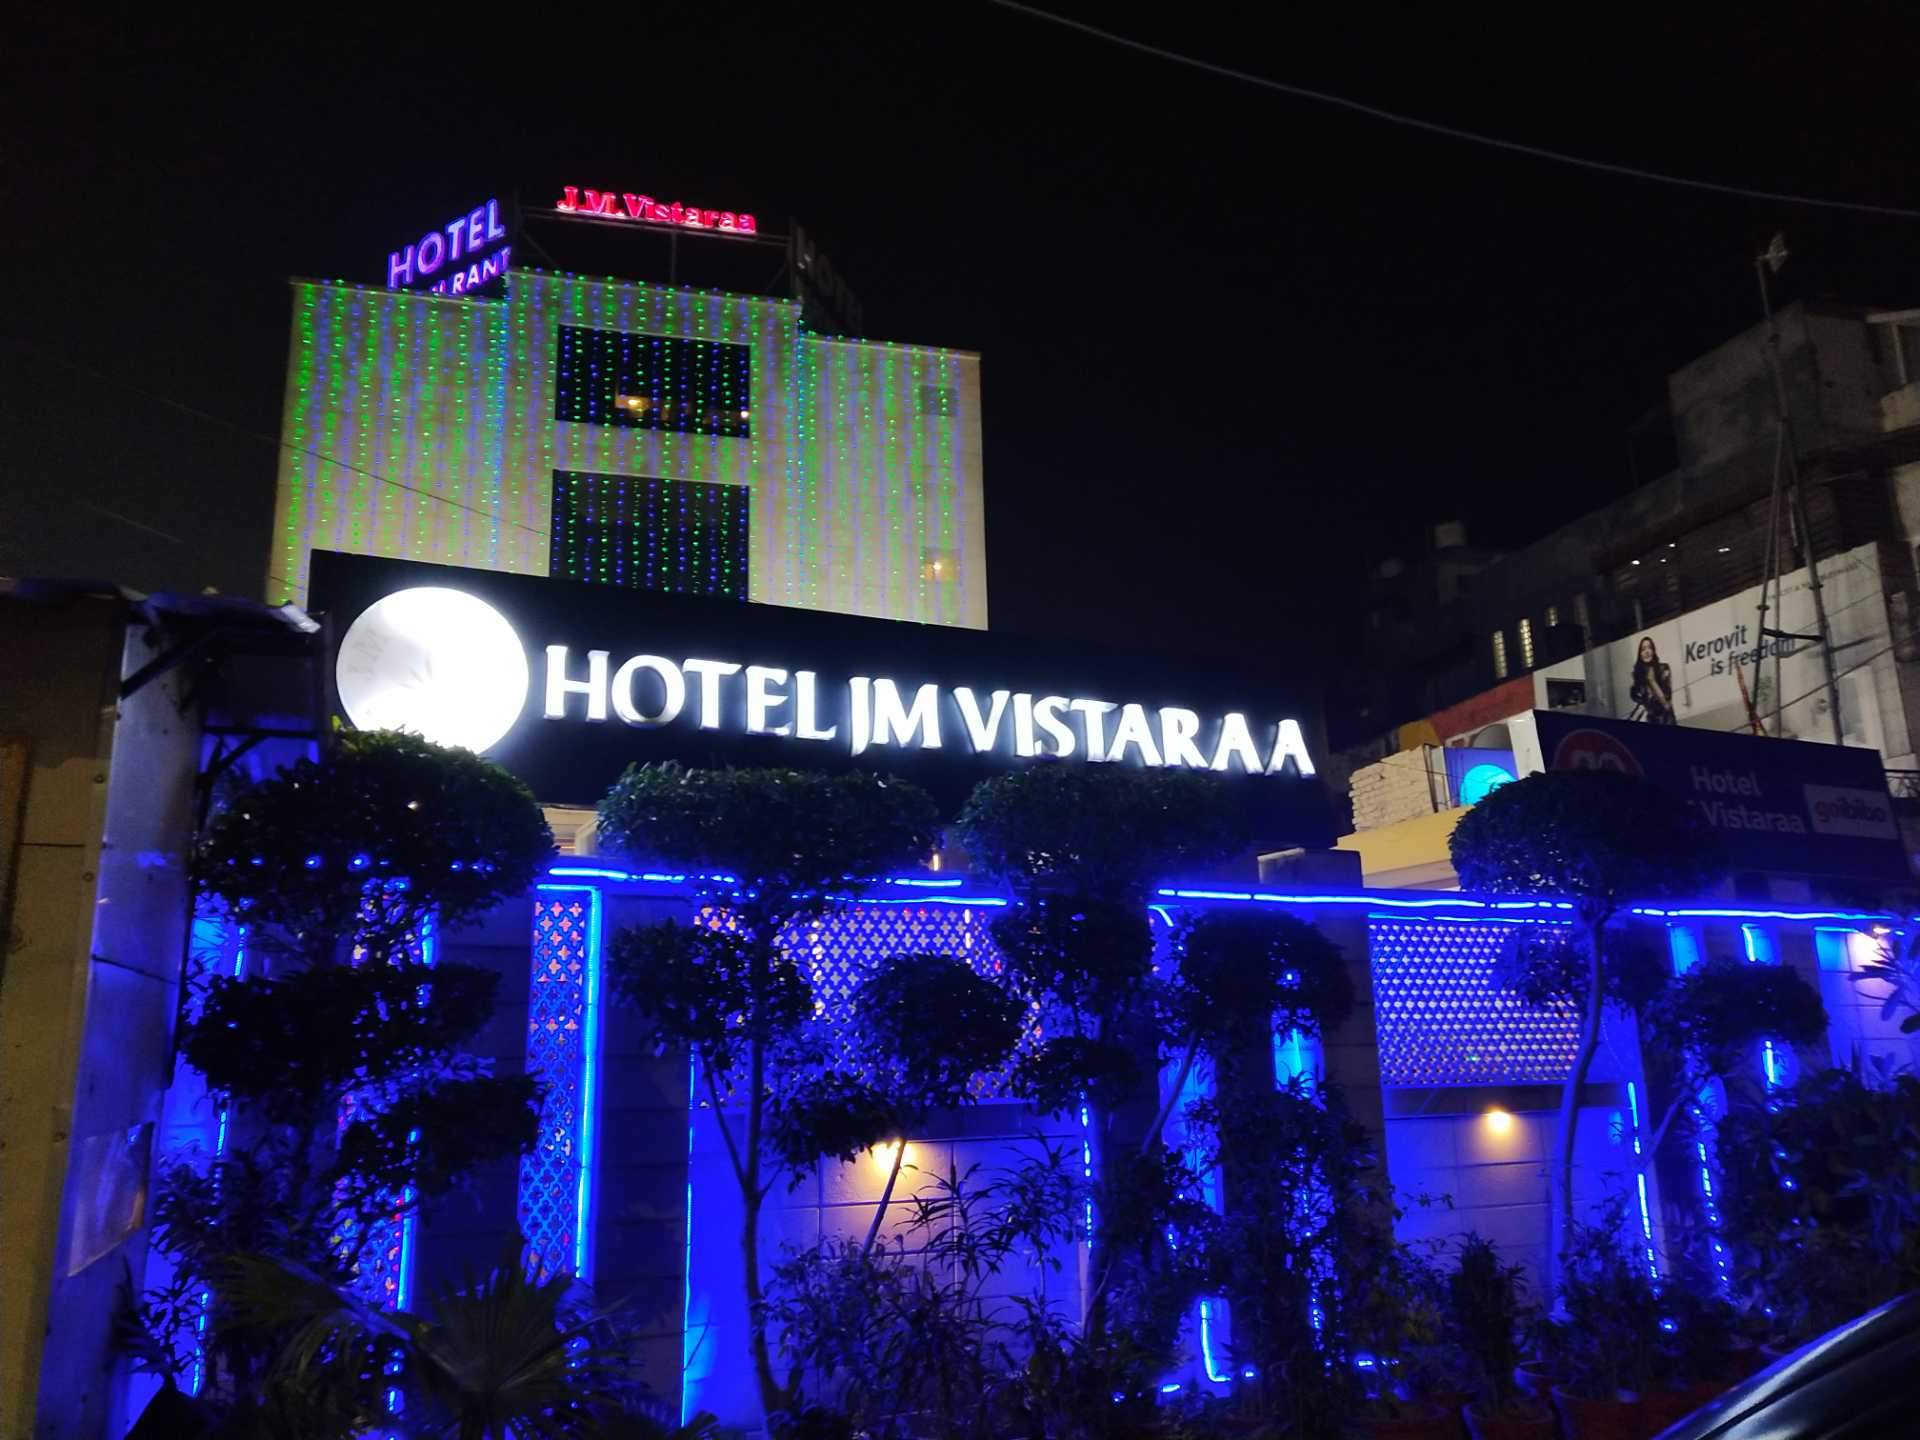 Hotel Jm Vistaraa